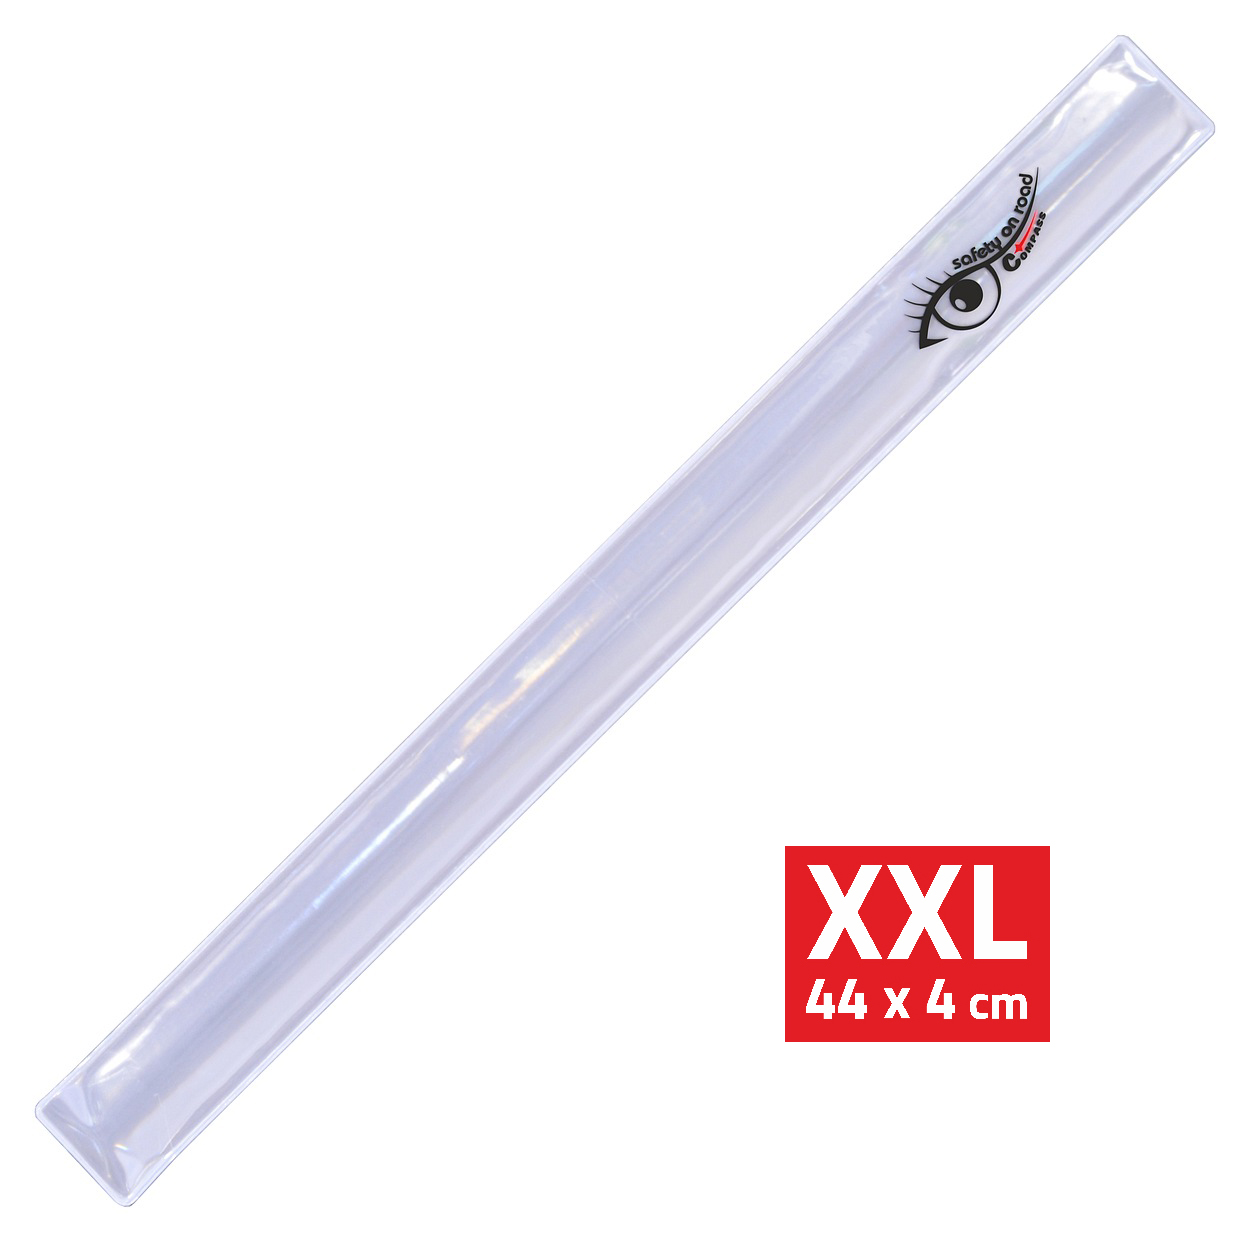 Pásek reflexní ROLLER XXL 4x44cm S.O.R. stříbrný